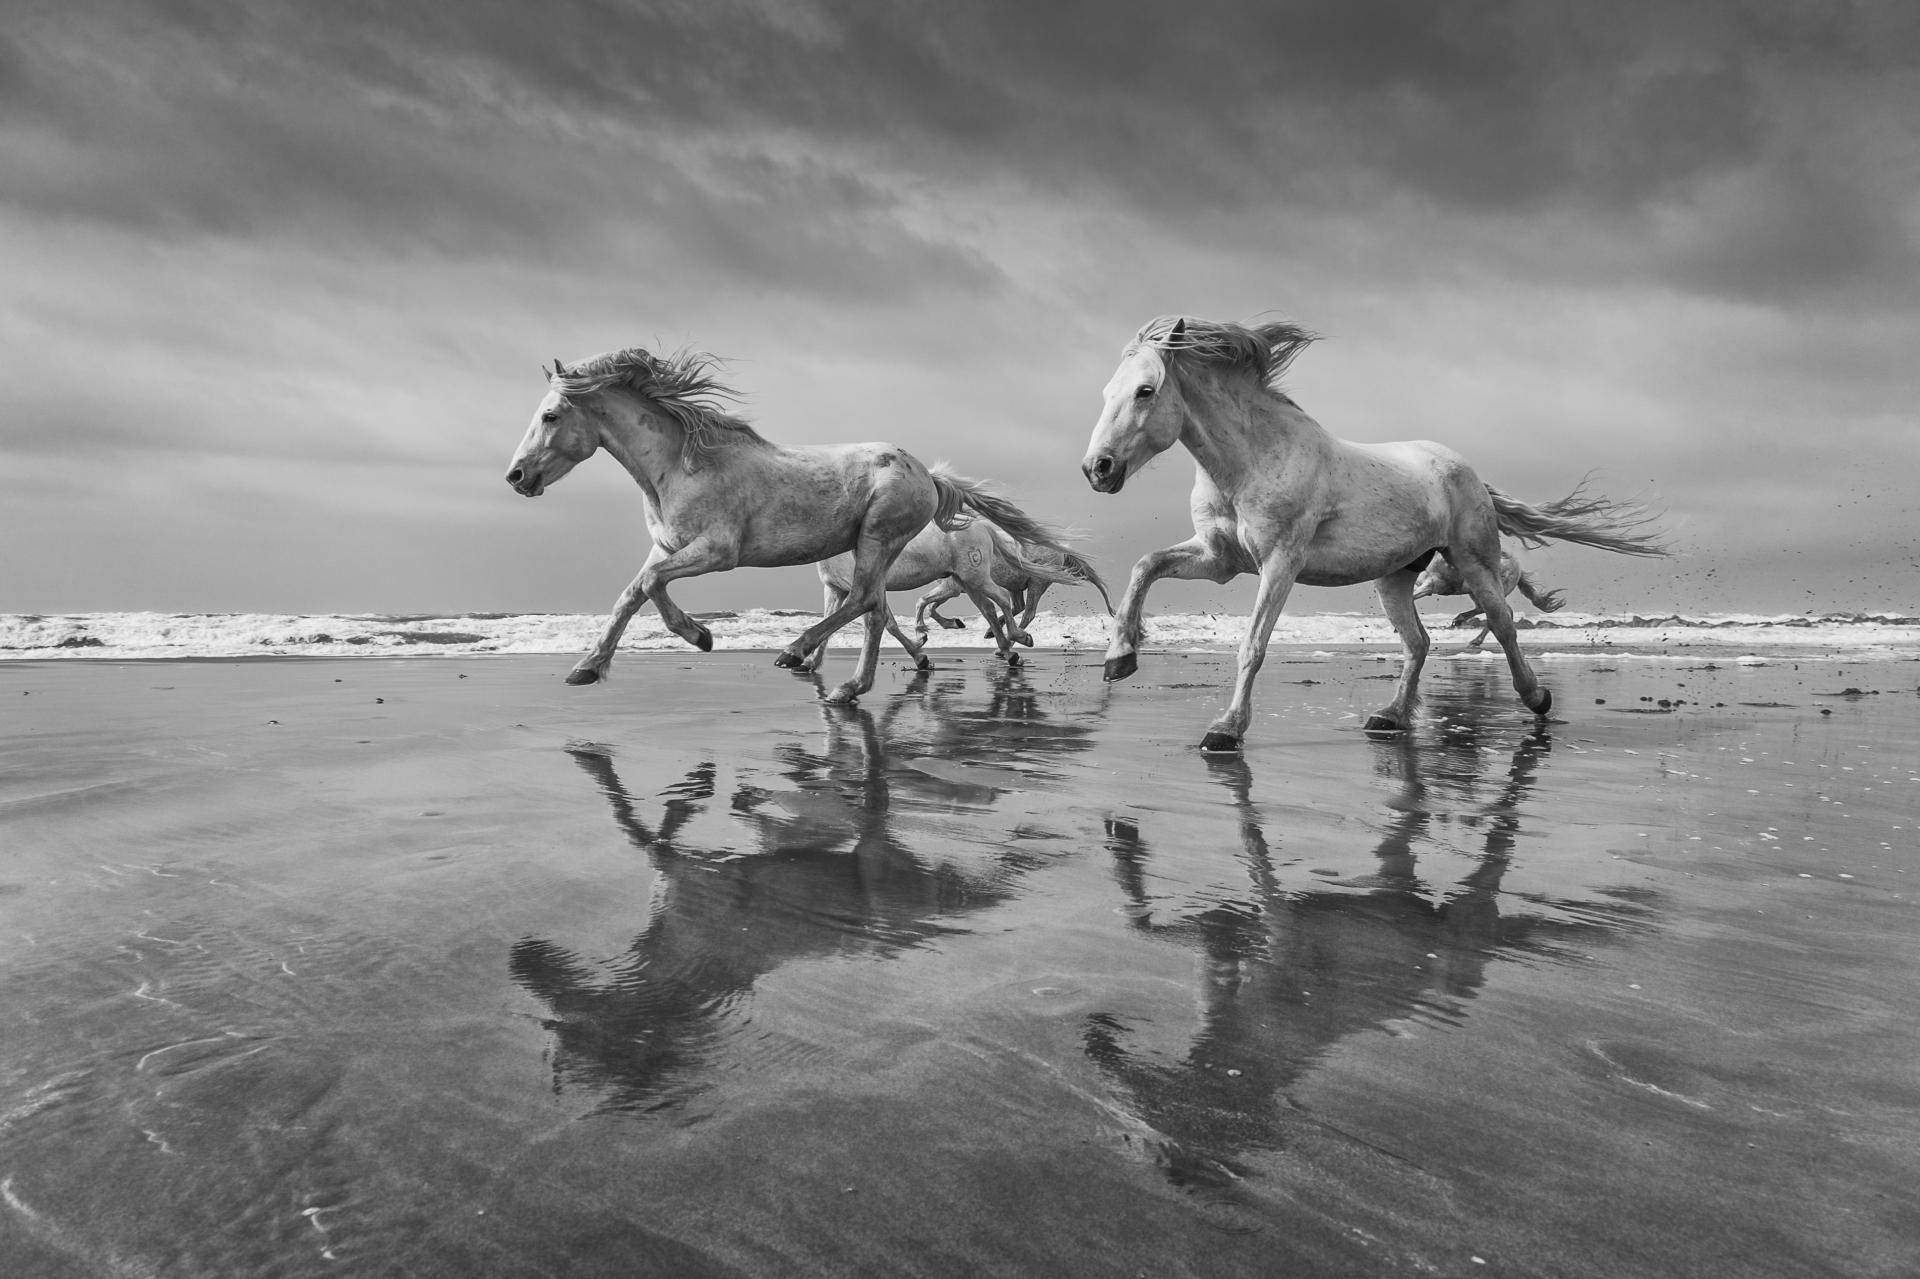 London Photography Awards Winner - Camargue horses